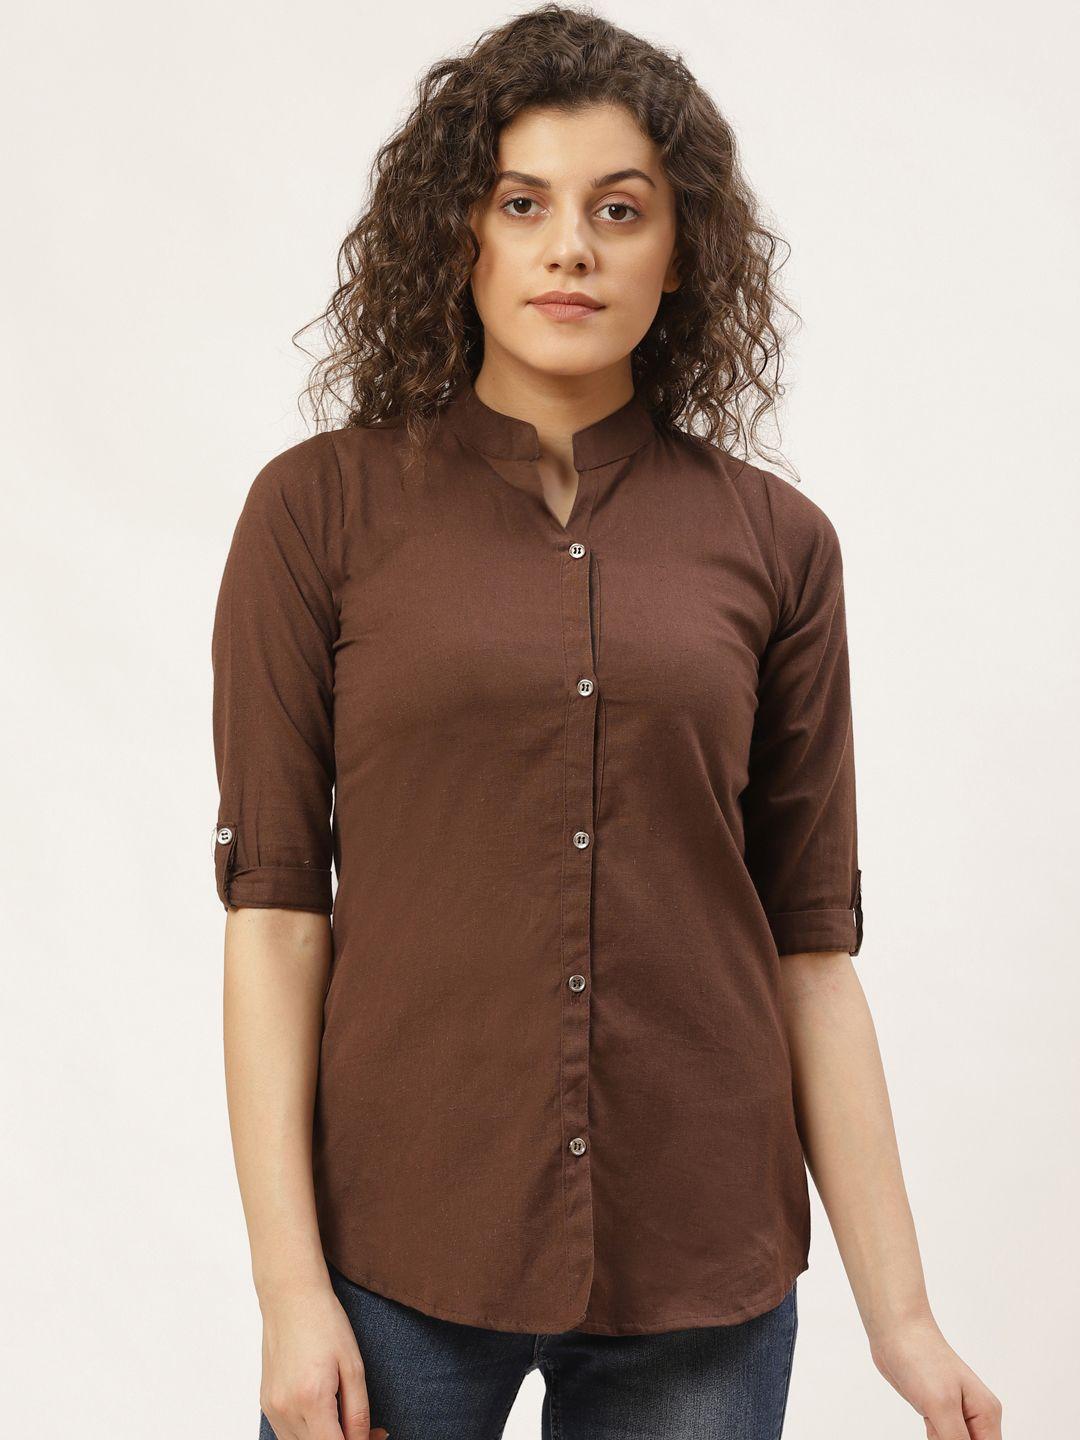 vastraa fusion women brown regular fit solid casual shirt